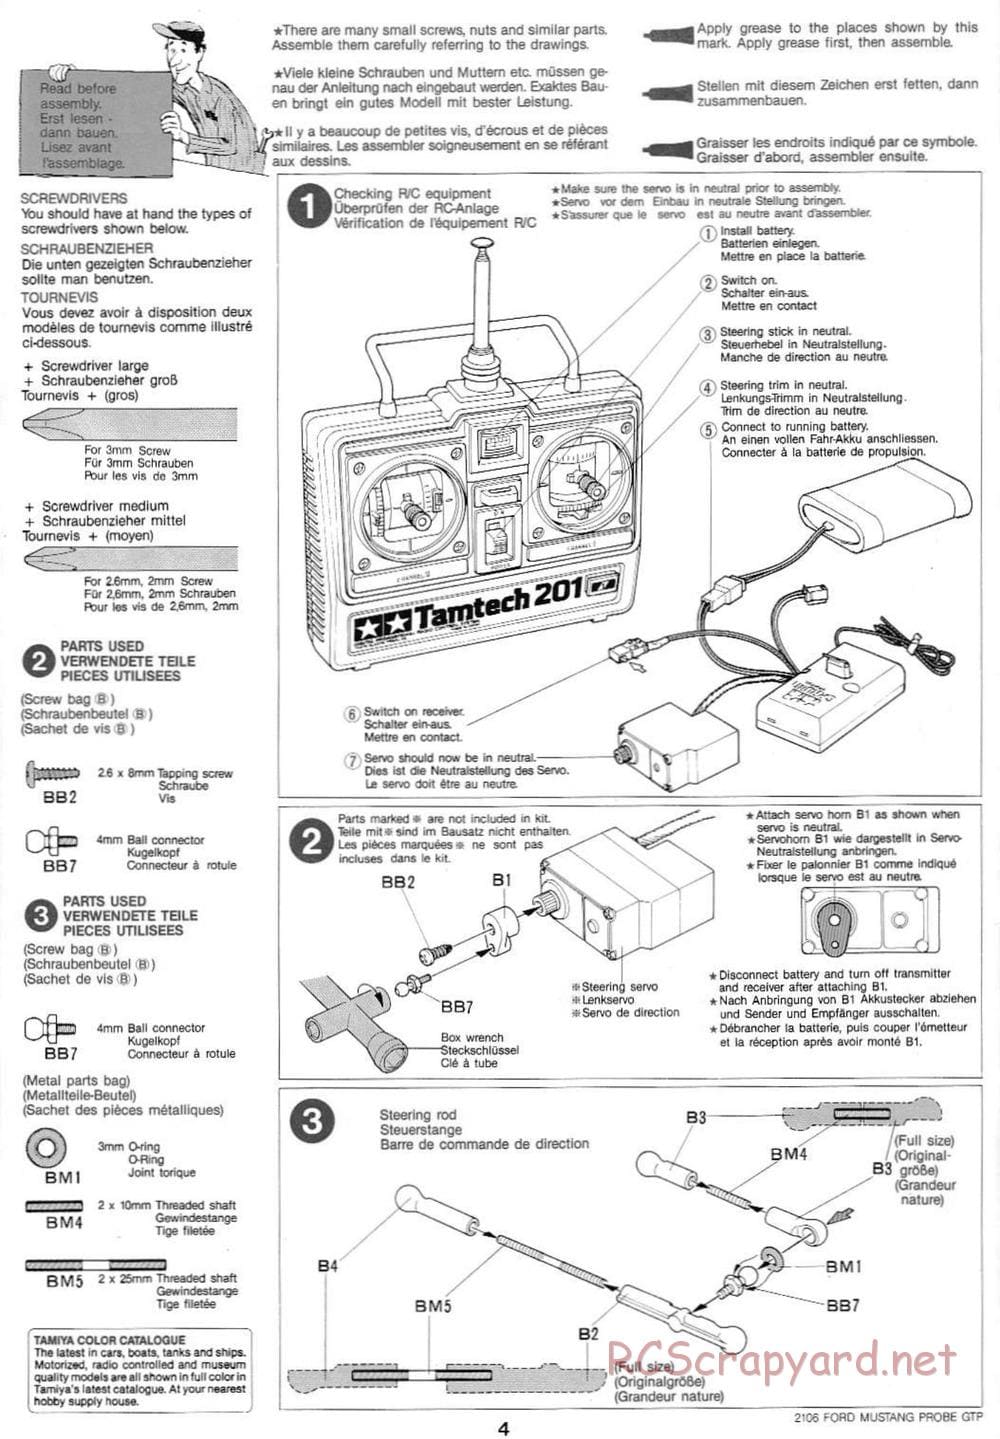 Tamiya - Tamtech - Ford Mustang Probe GTP Chassis - Manual - Page 4